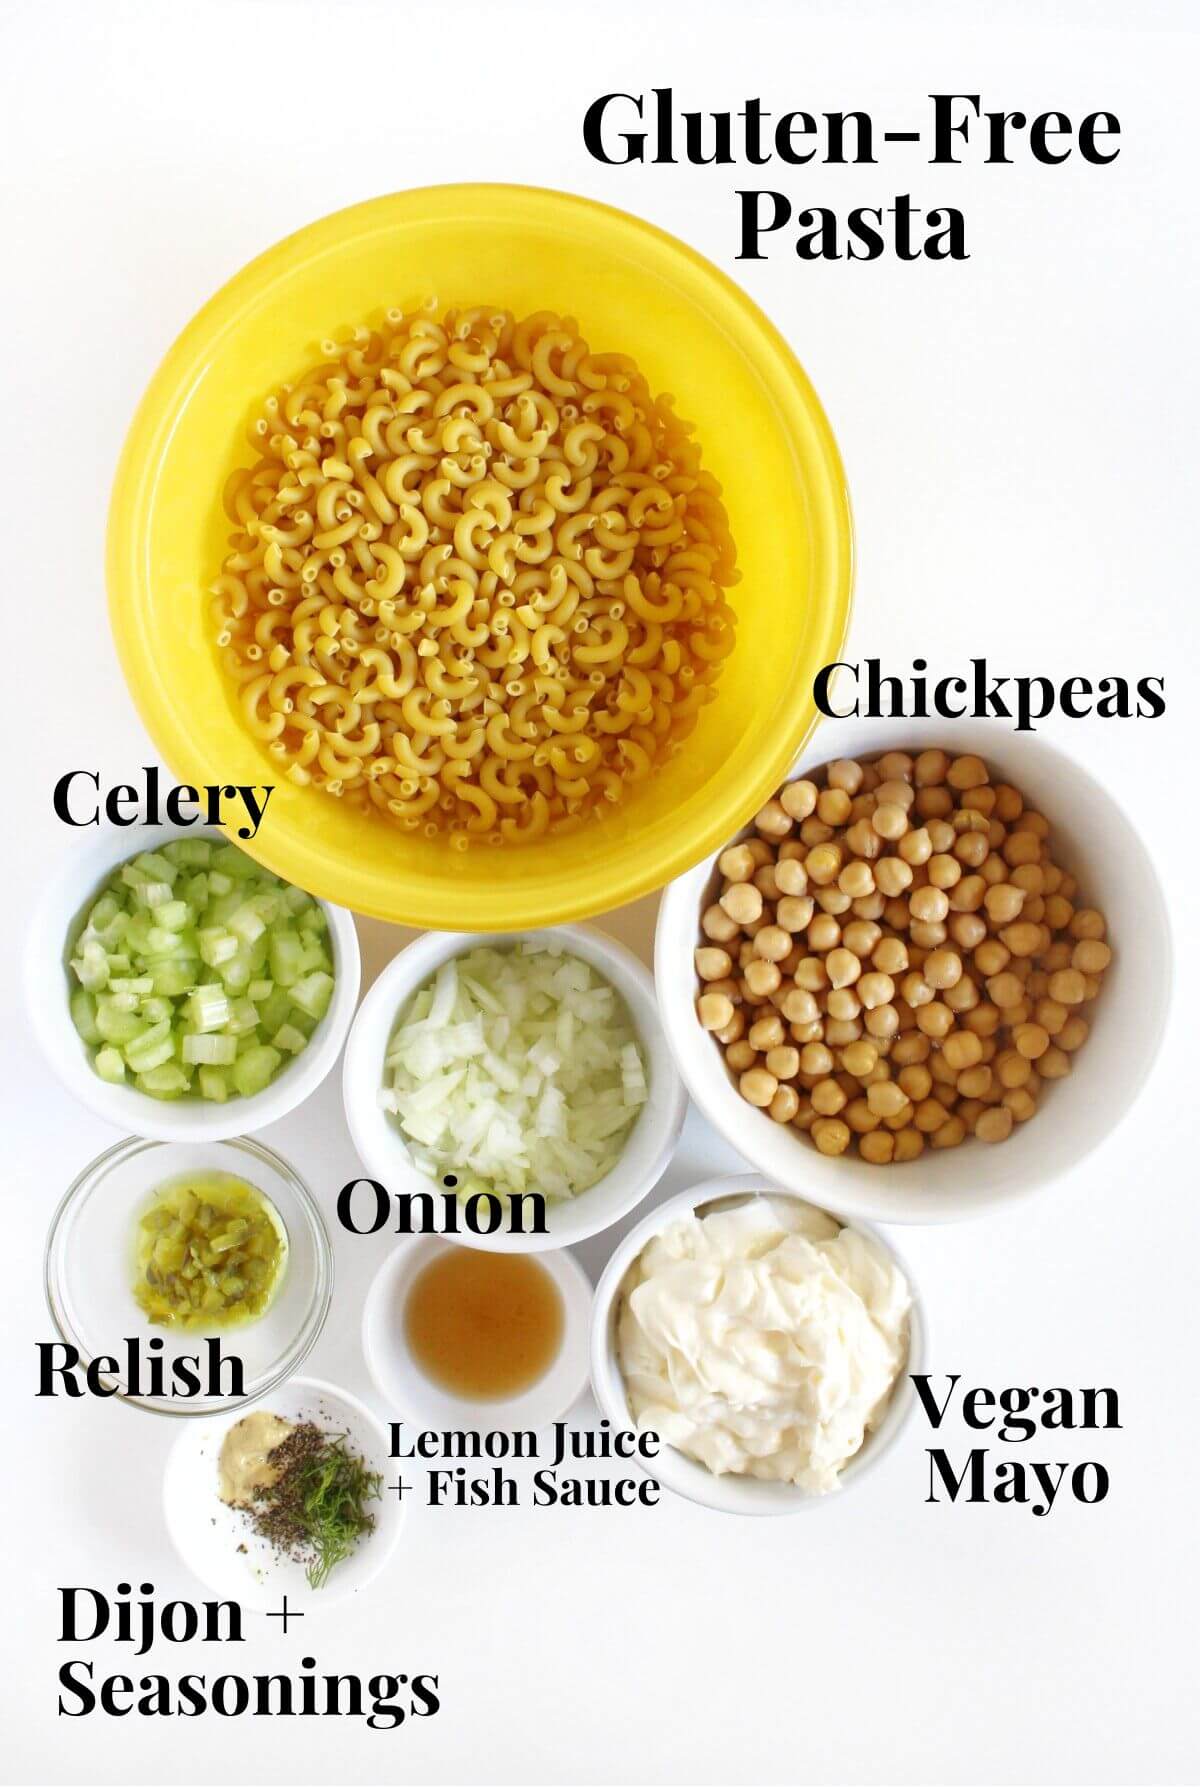 ingredients for vegan gluten-free tuna pasta salad.